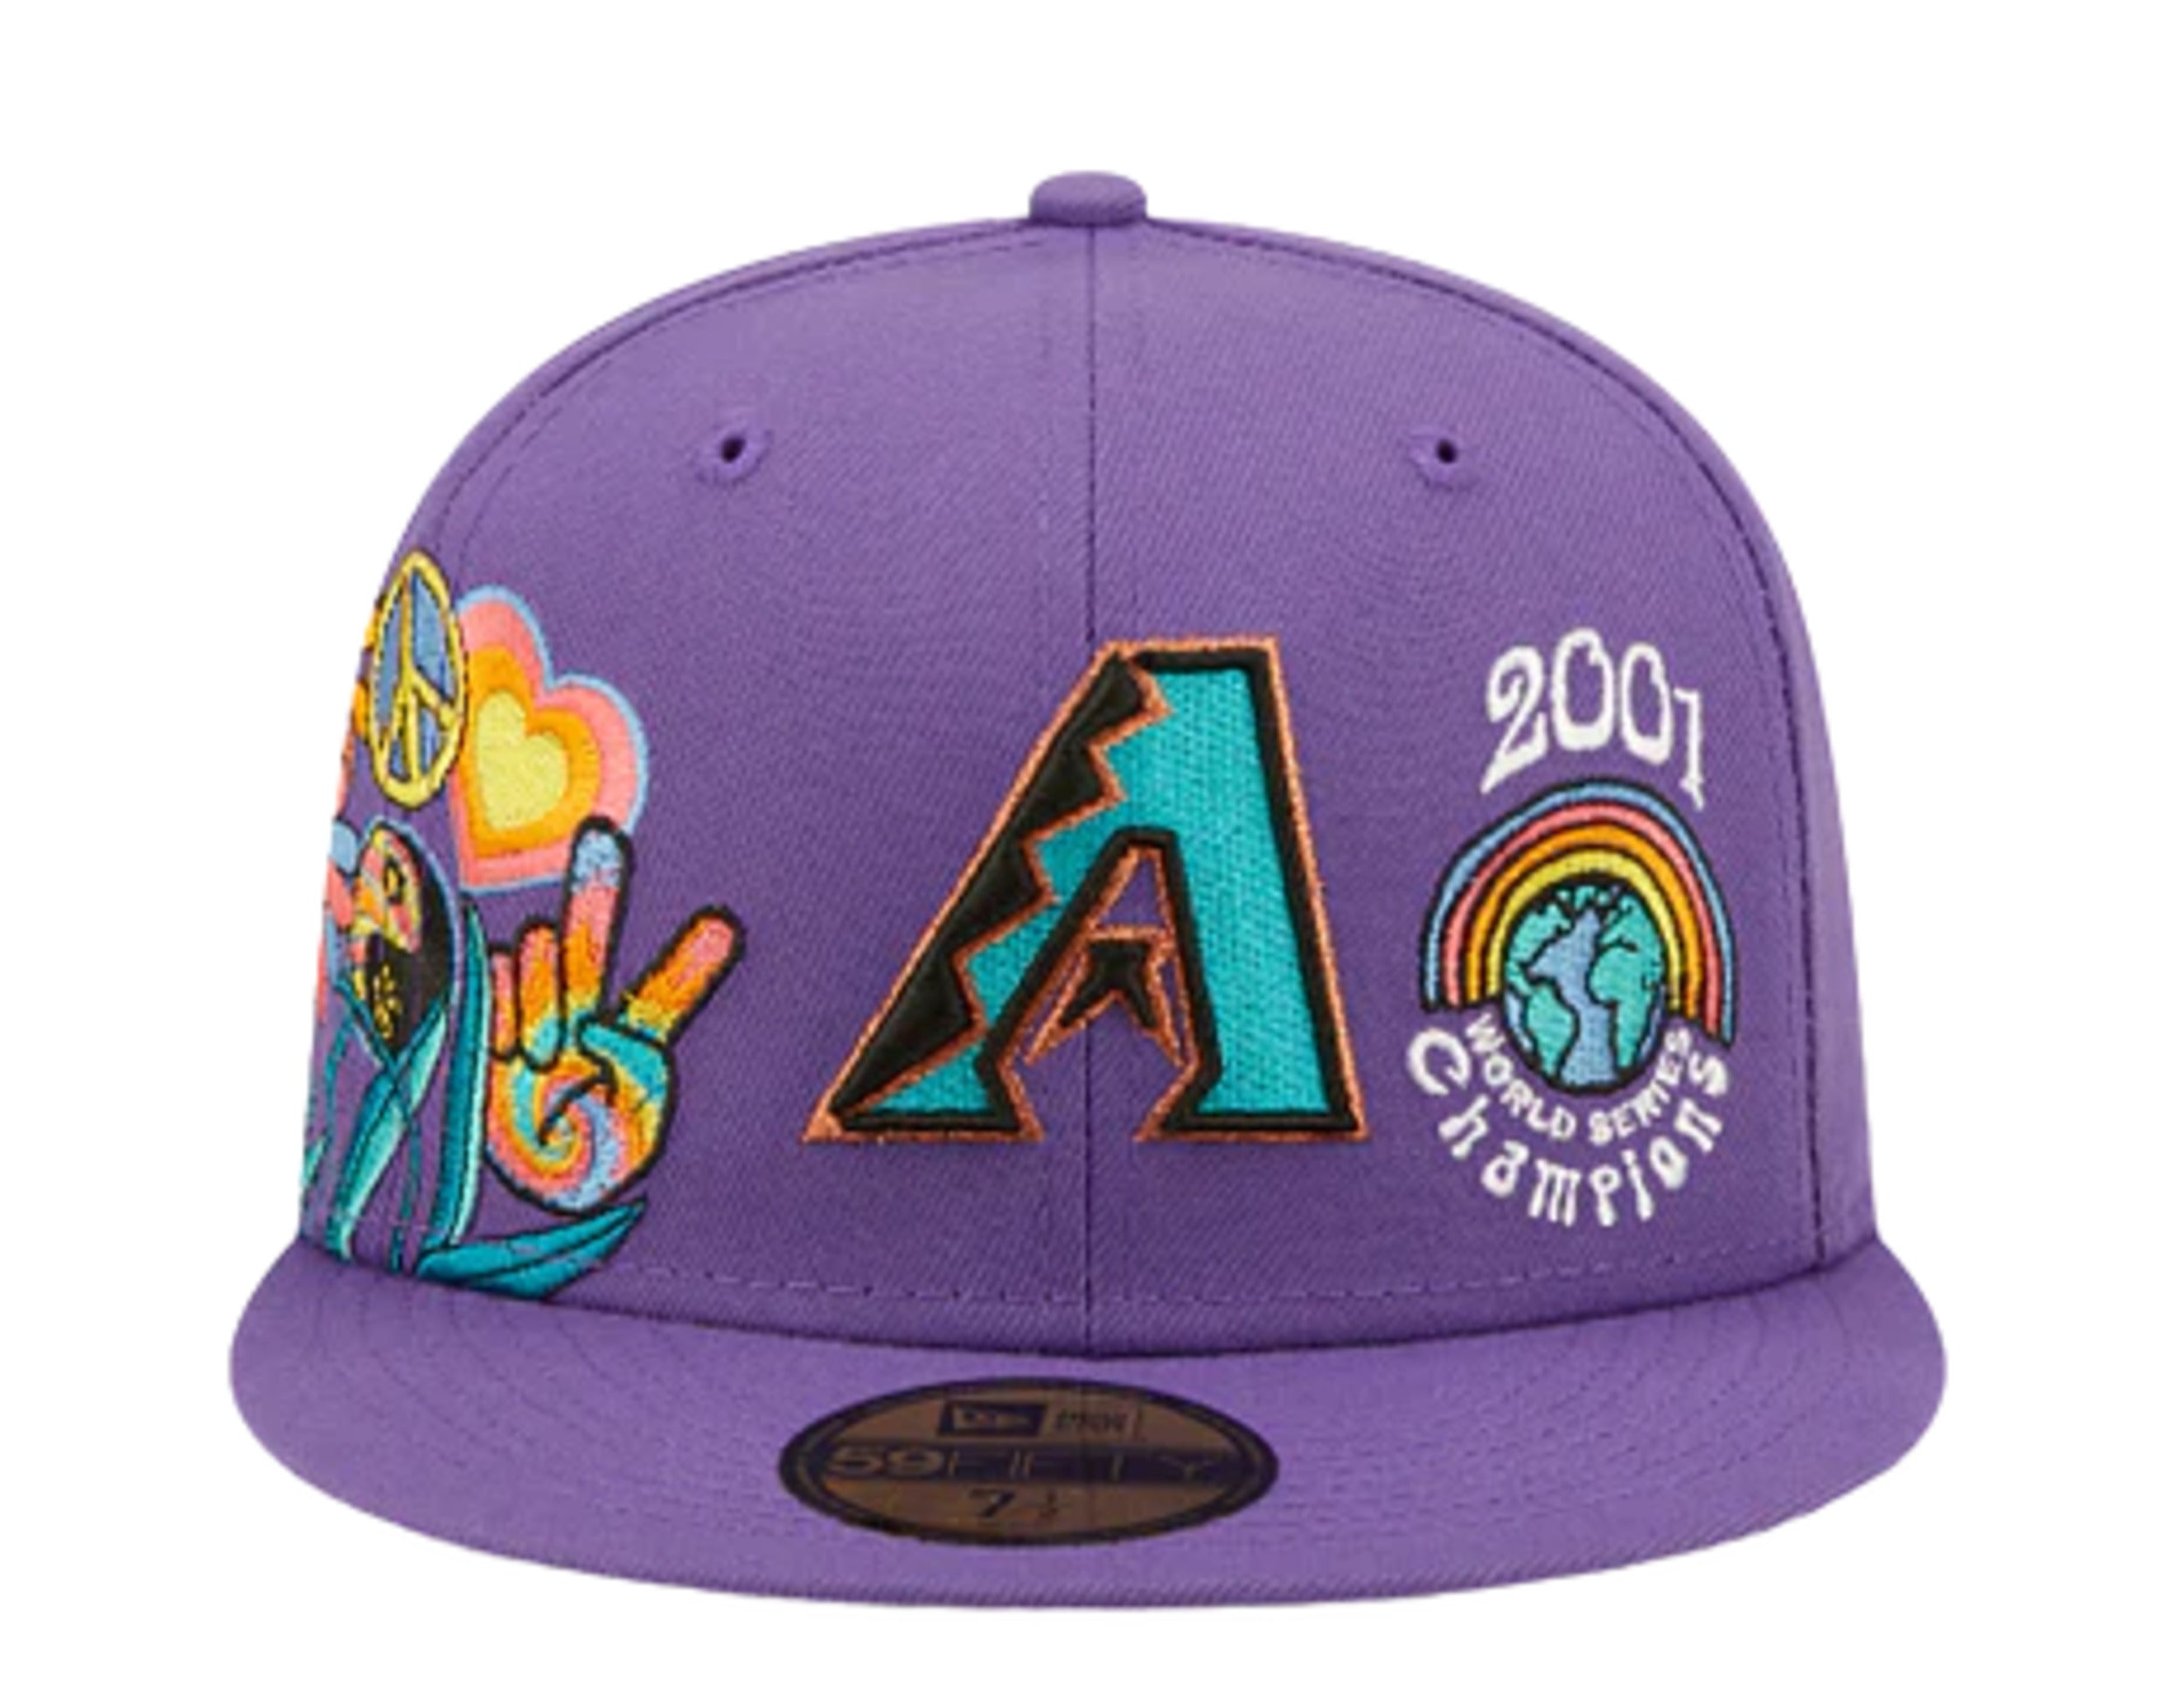 New Era 59FIFTY MLB Arizona Diamondbacks Groovy Fitted Hat 7